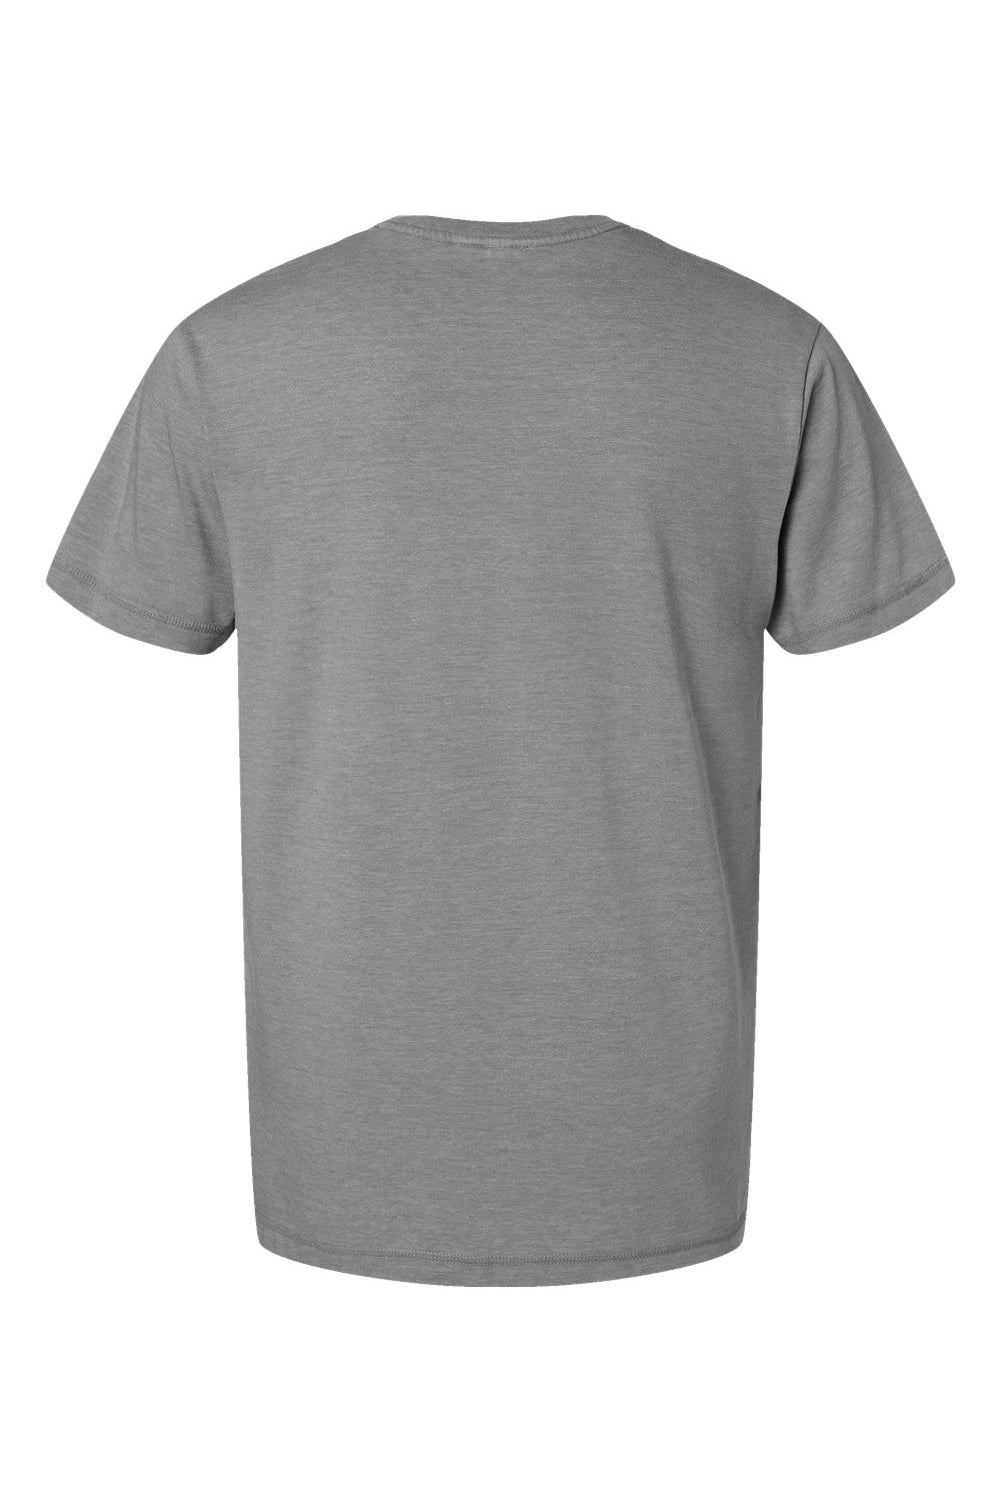 LAT 6902 Mens Vintage Wash Short Sleeve Crewneck T-Shirt Grey Flat Back